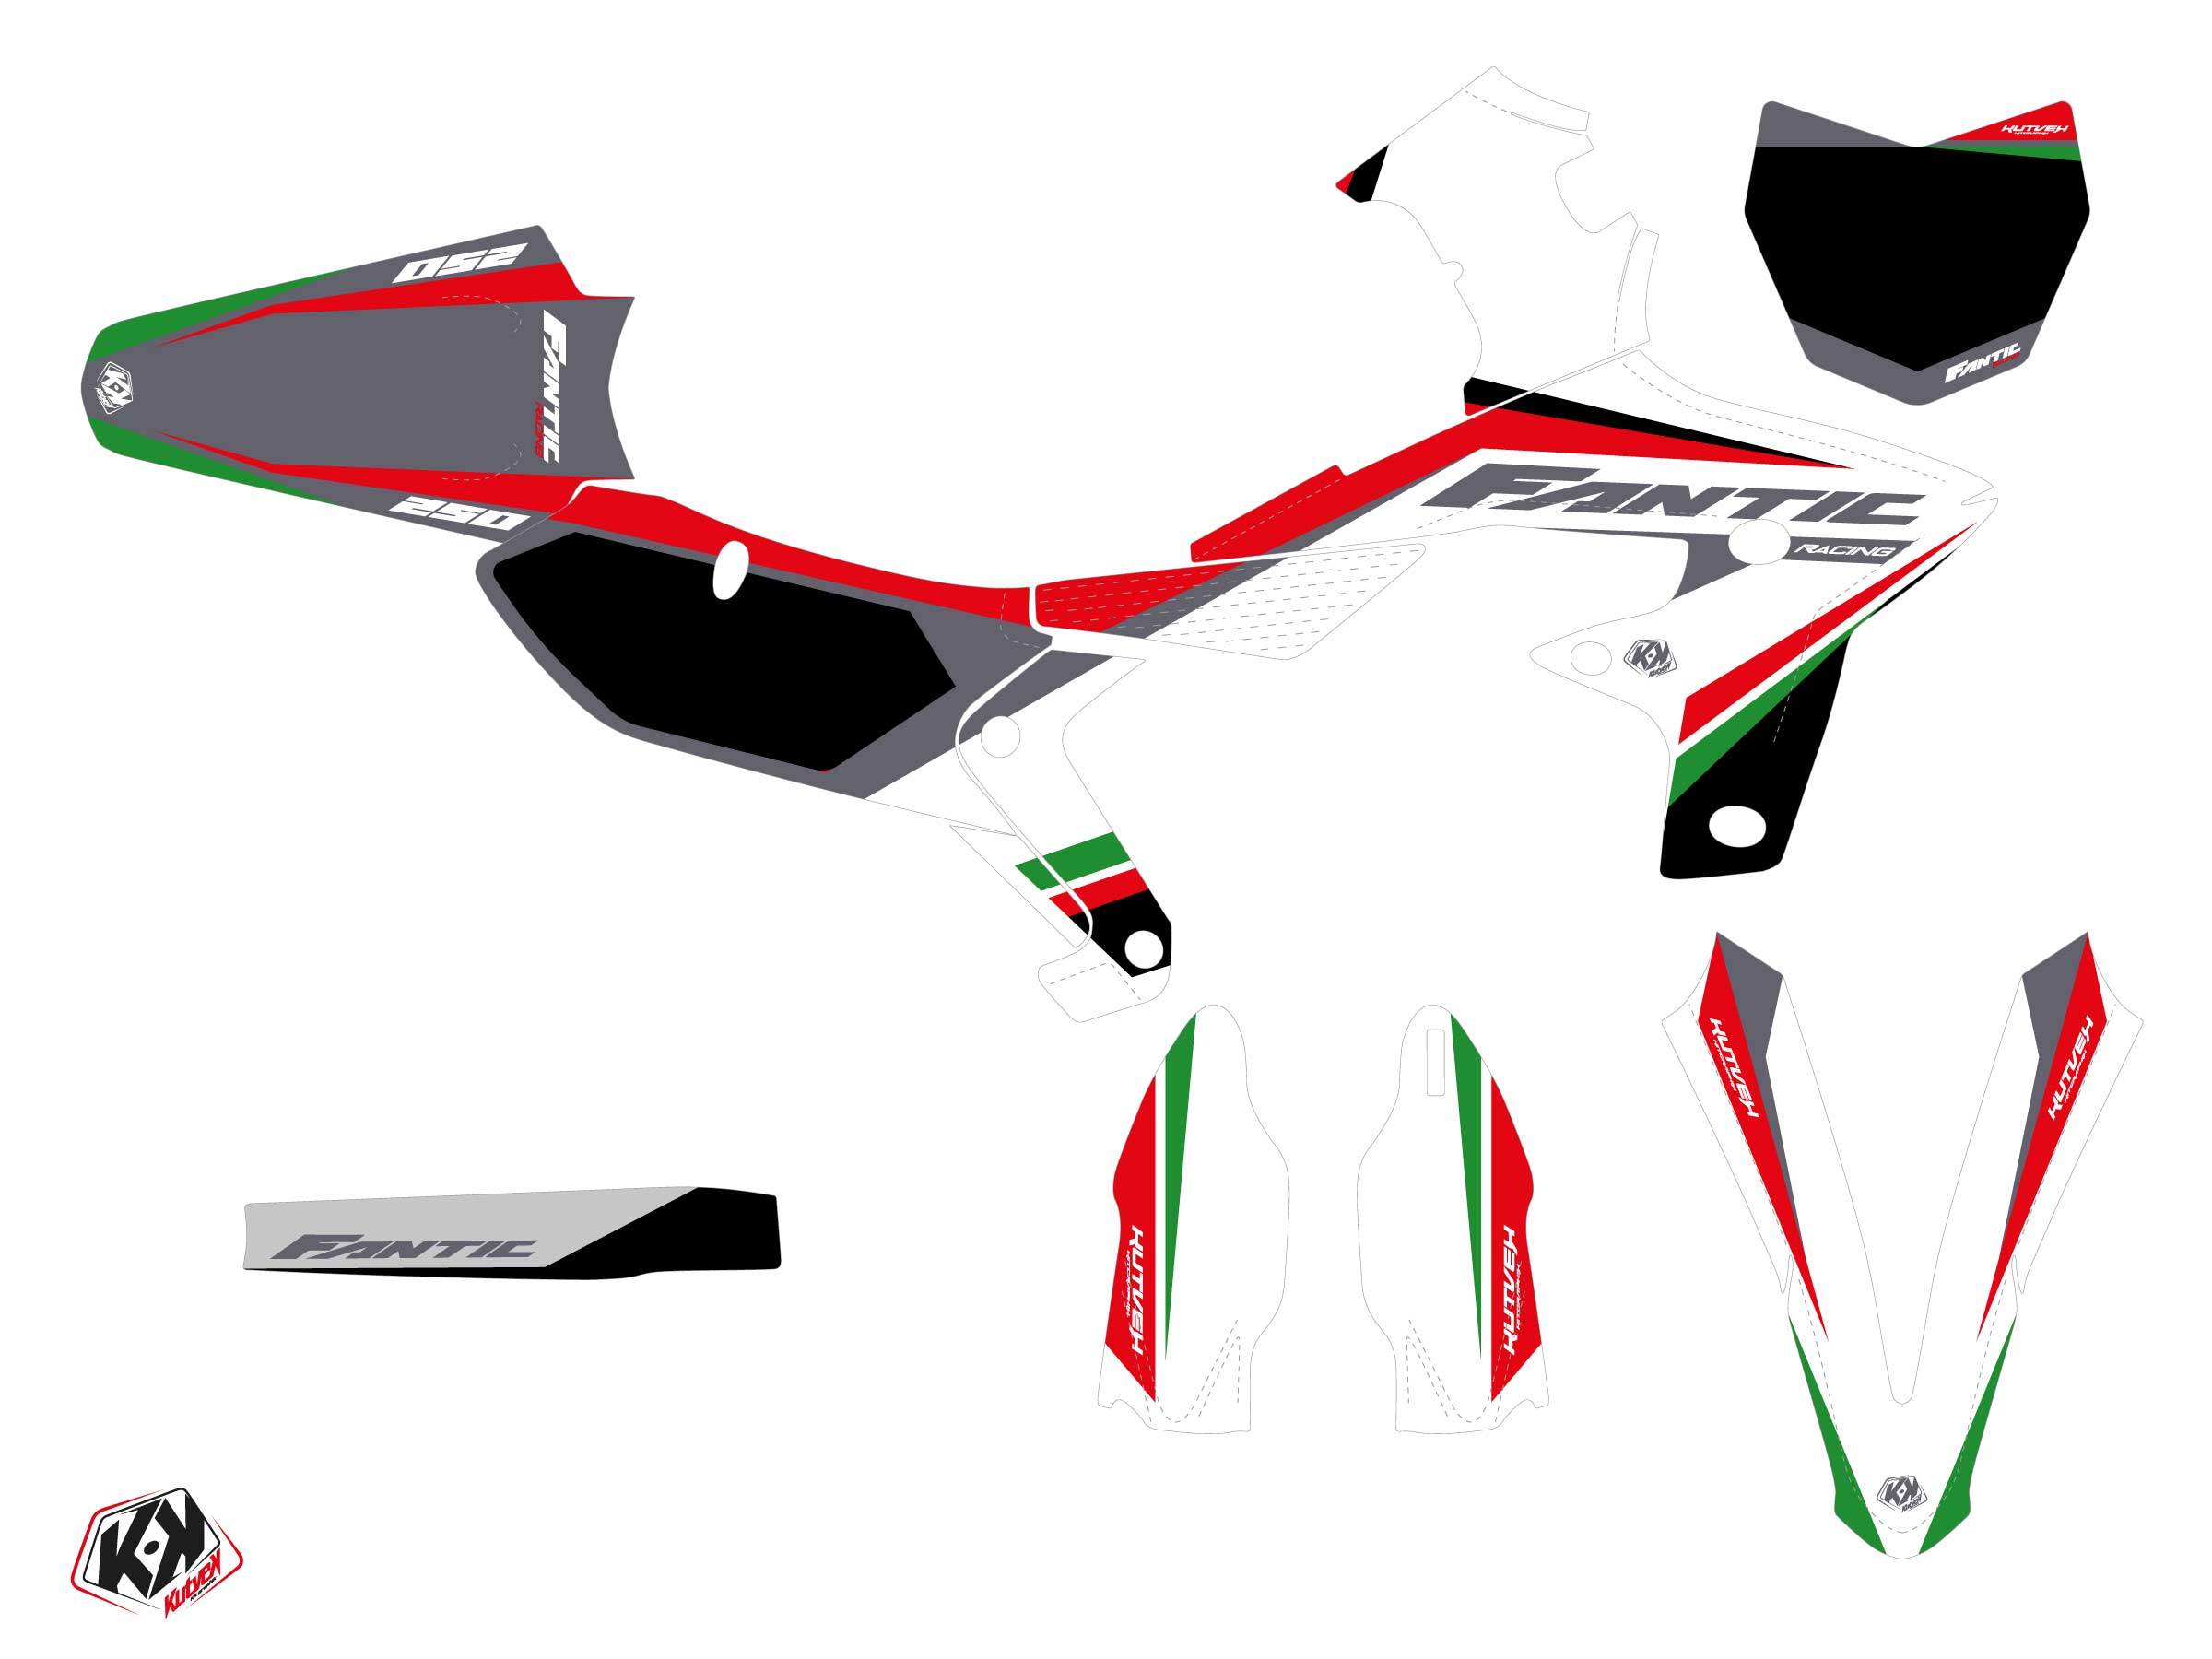 Fantic Xx 250 F Dirt Bike Mantova Graphic Kit Green